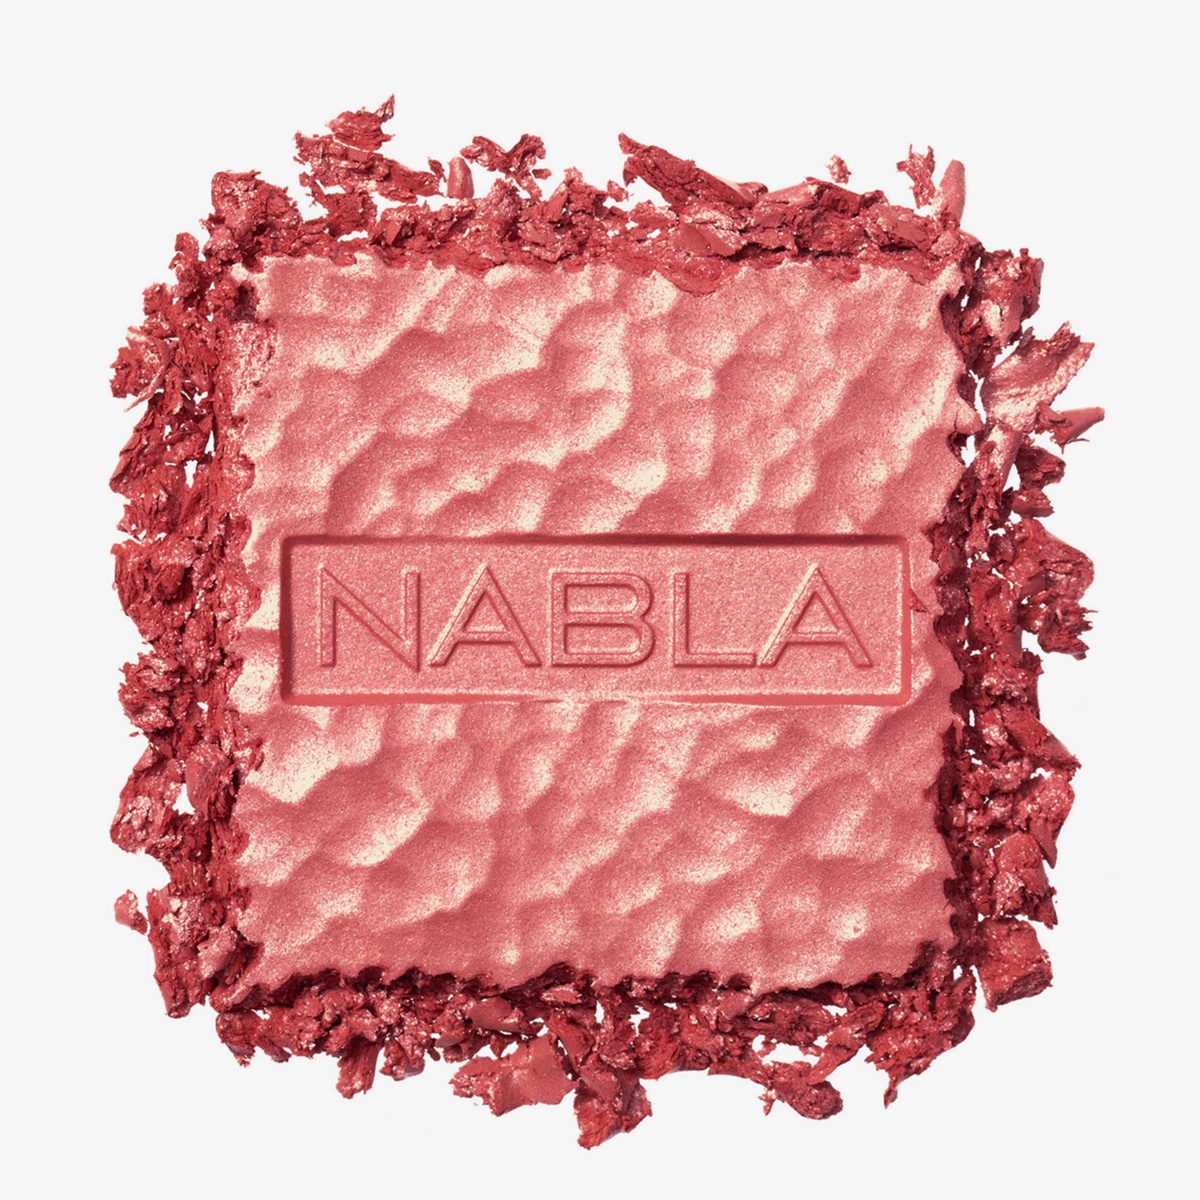 Nabla Cosmetics - Lola Skin Glazing Highlighter & Luminizer